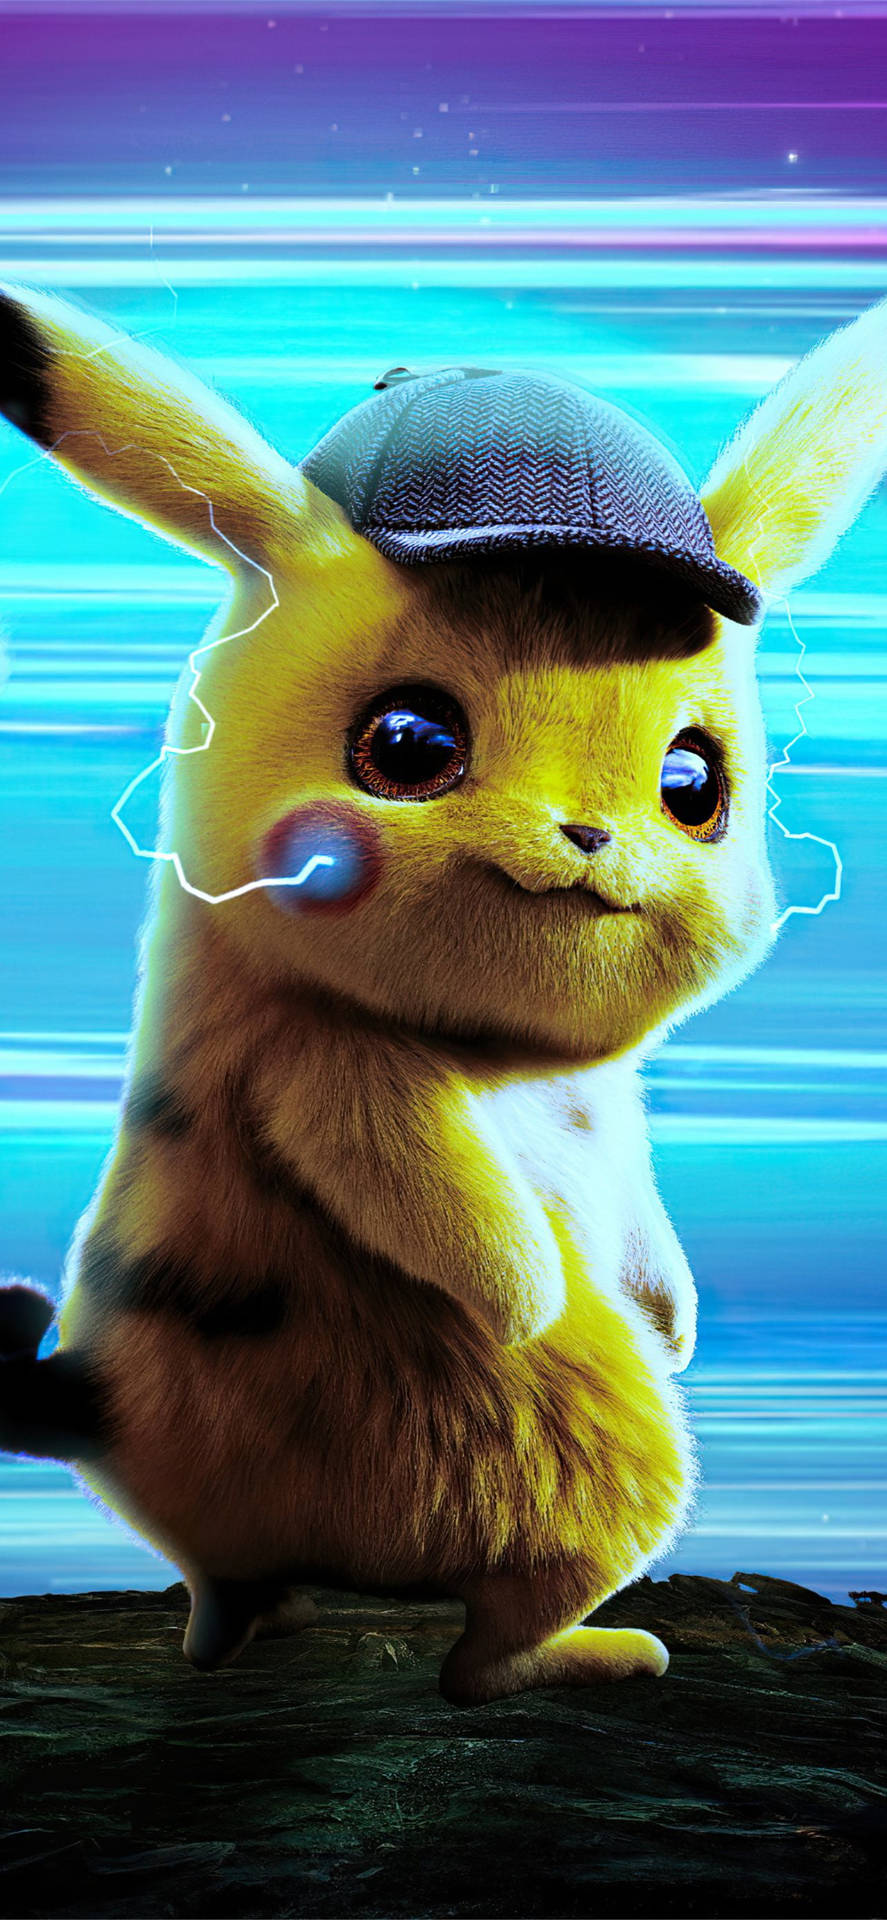 Iphone 11 Pro Max 4k Pikachu Background